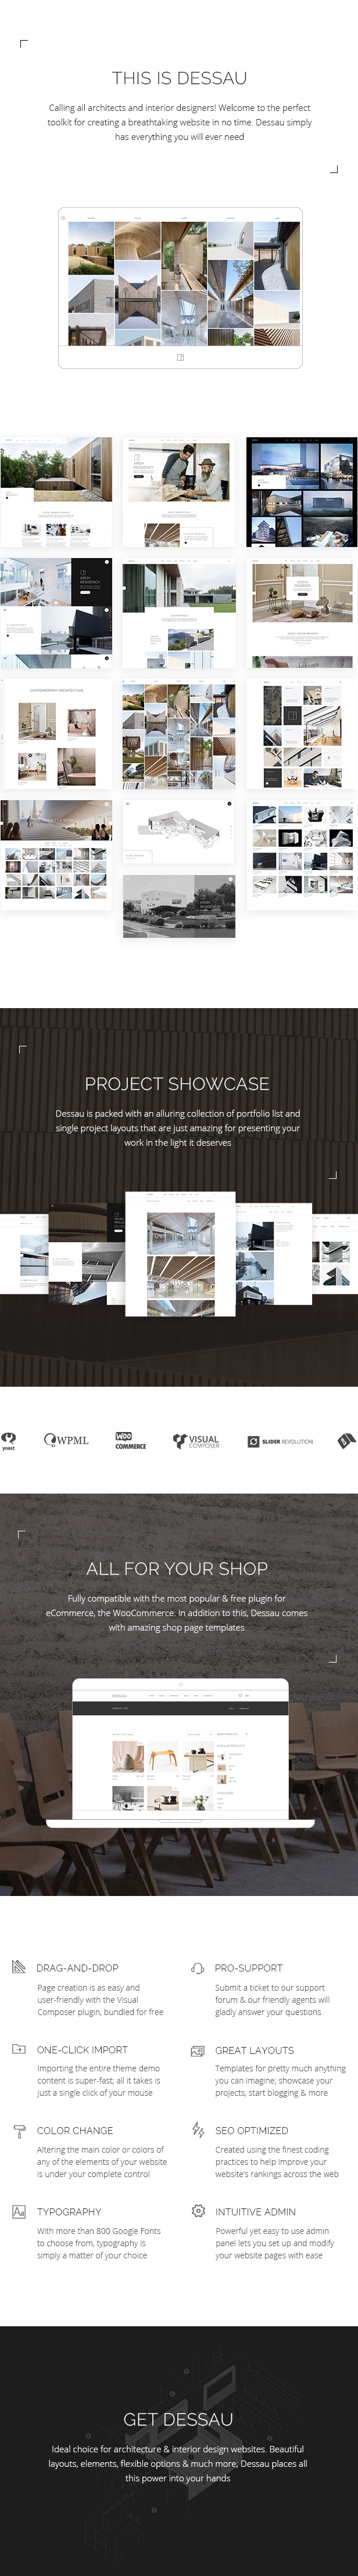 WordPress theme Dessau - A Contemporary Theme for Architects and Interior Designers (Portfolio)